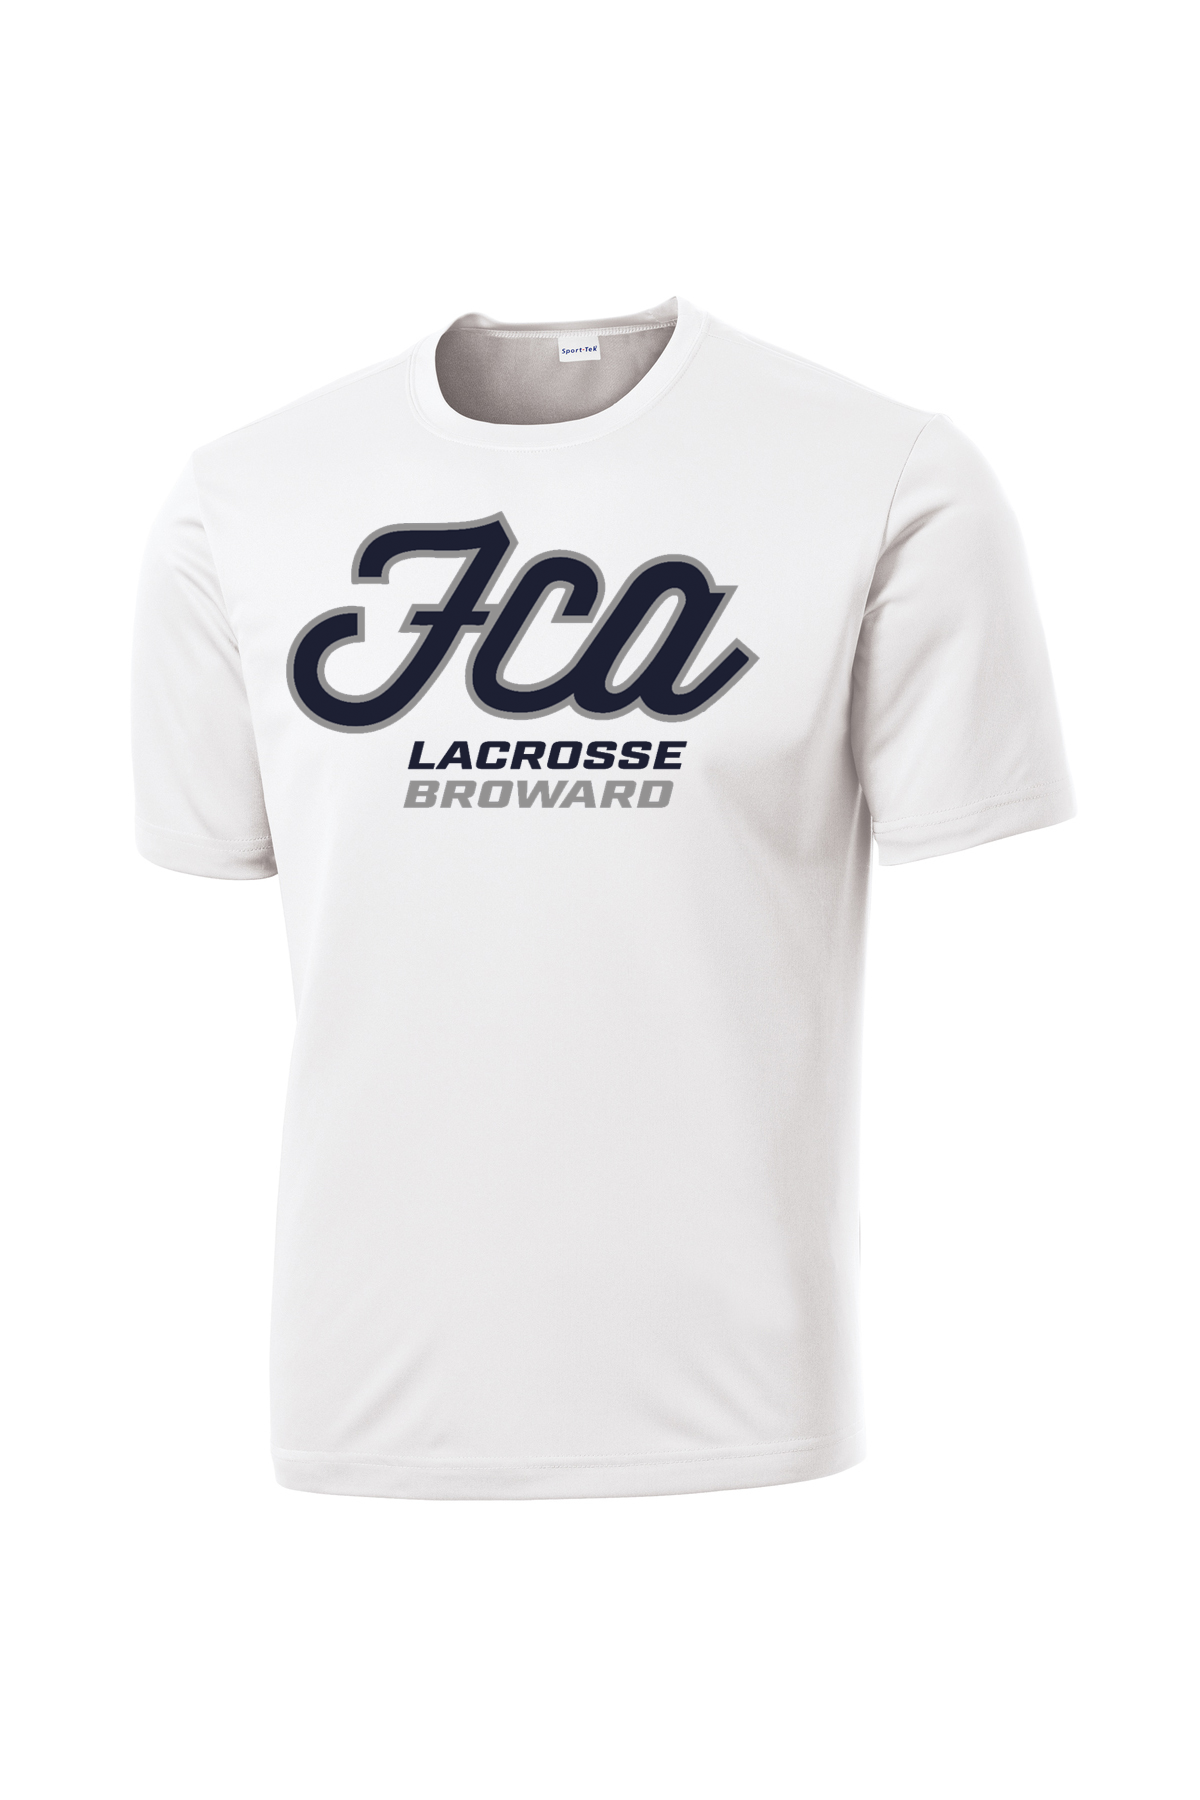 FCA Lacrosse T-Shirt (White)